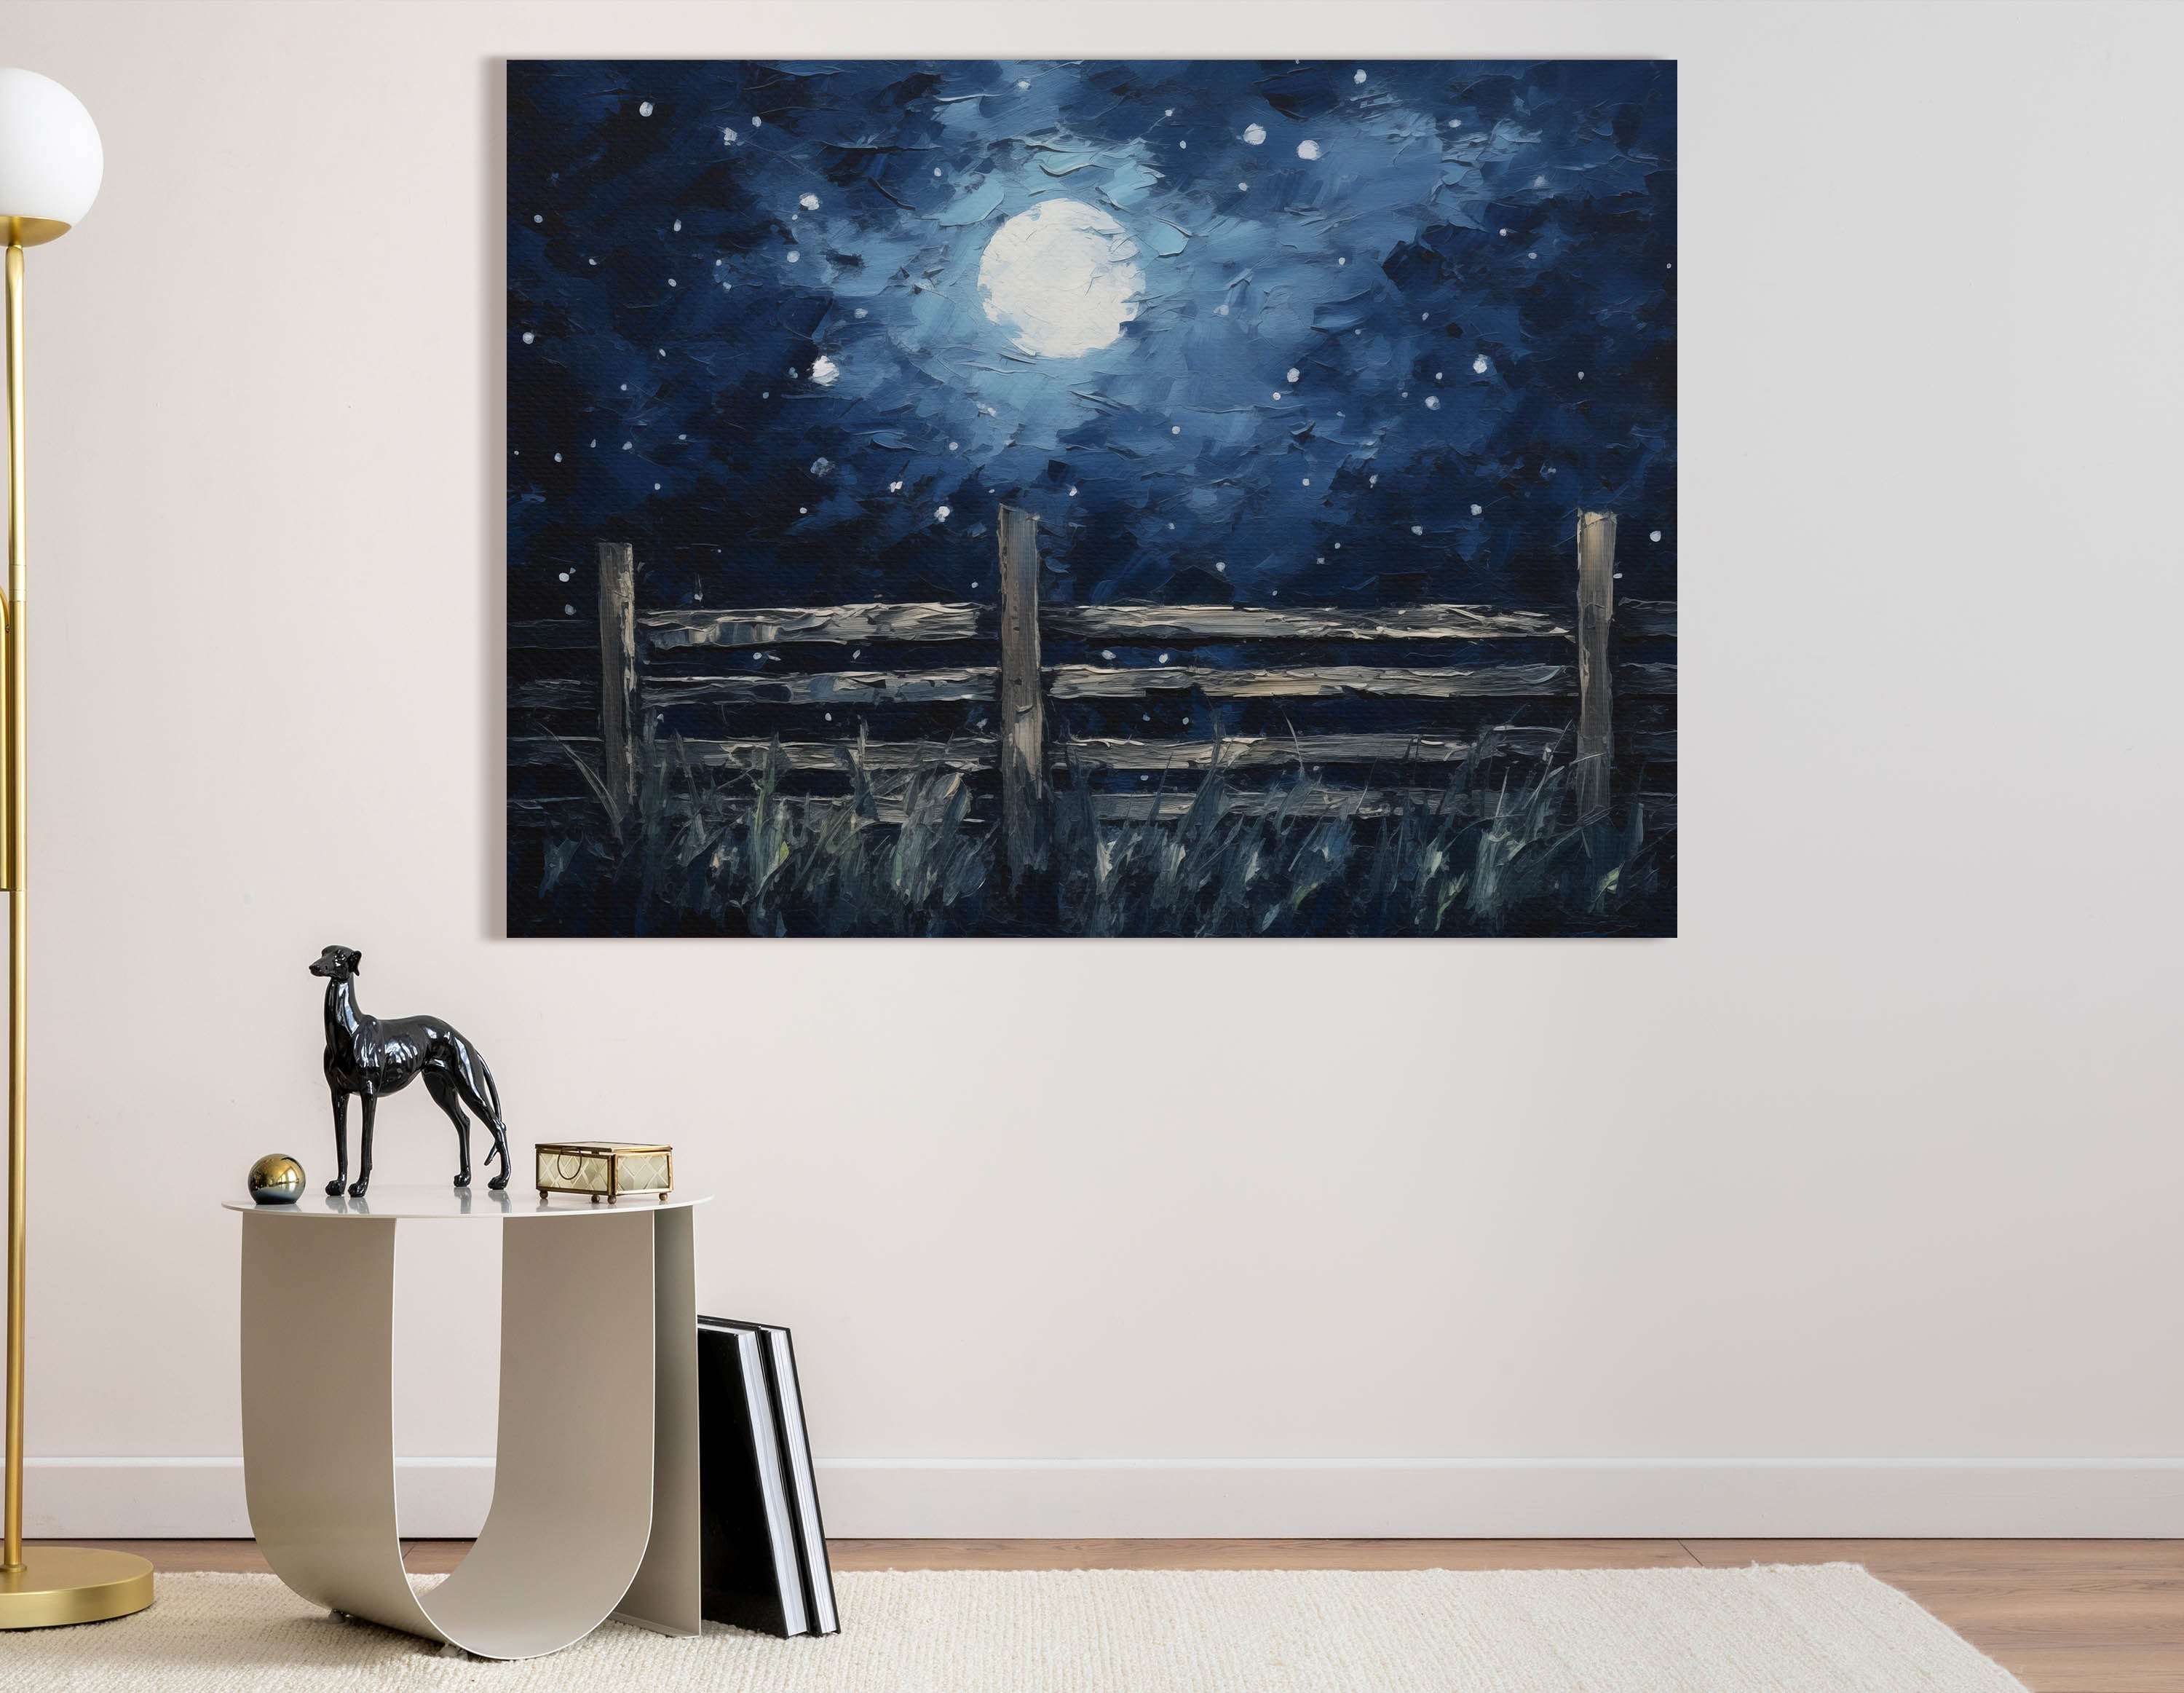 Full Moon Over Wooden Fence - Canvas Print - Artoholica Ready to Hang Canvas Print